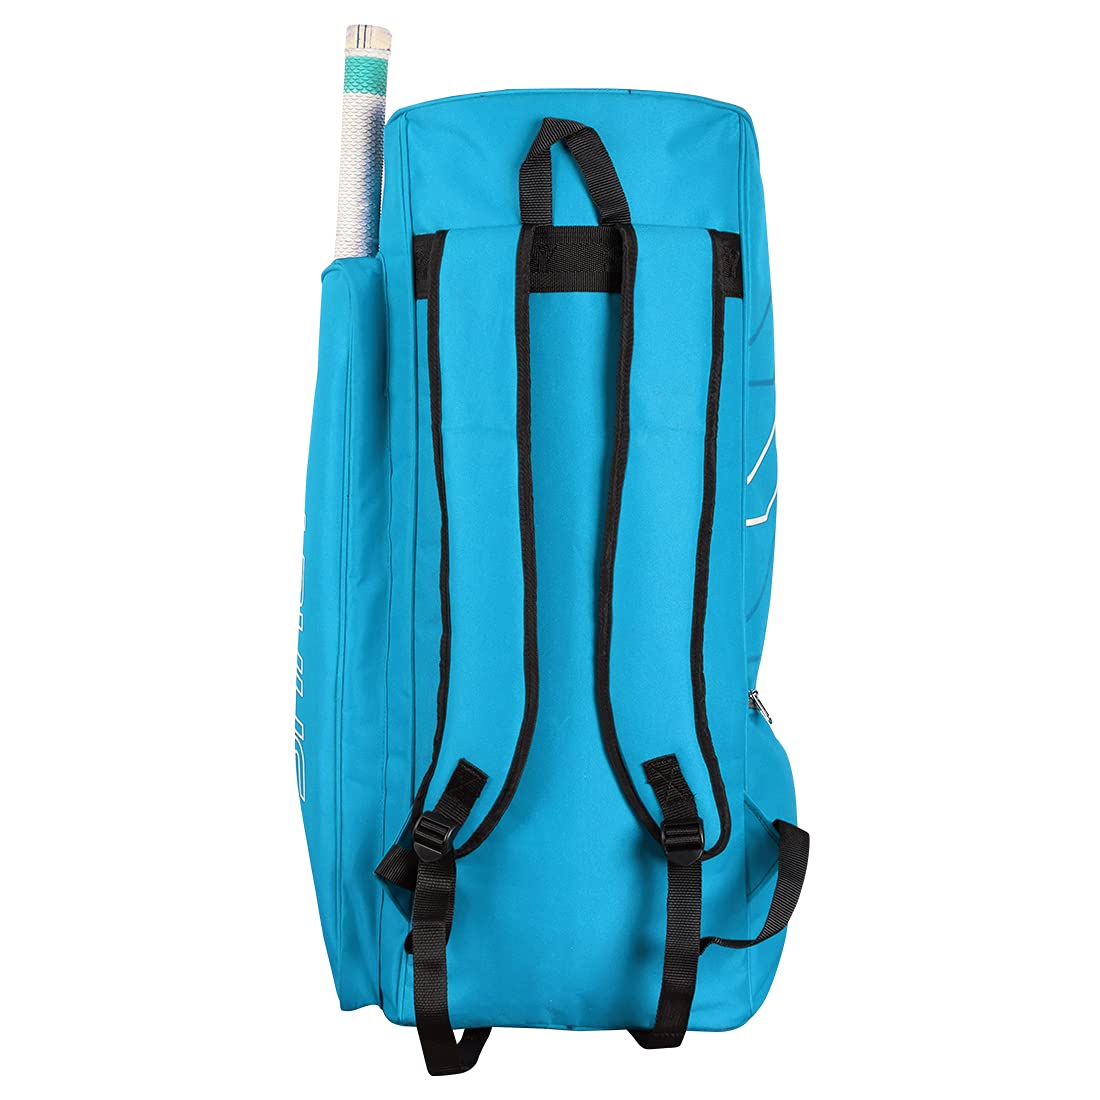 Shrey Kare Duffle Cricket Kitbag - Blue - Best Price online Prokicksports.com